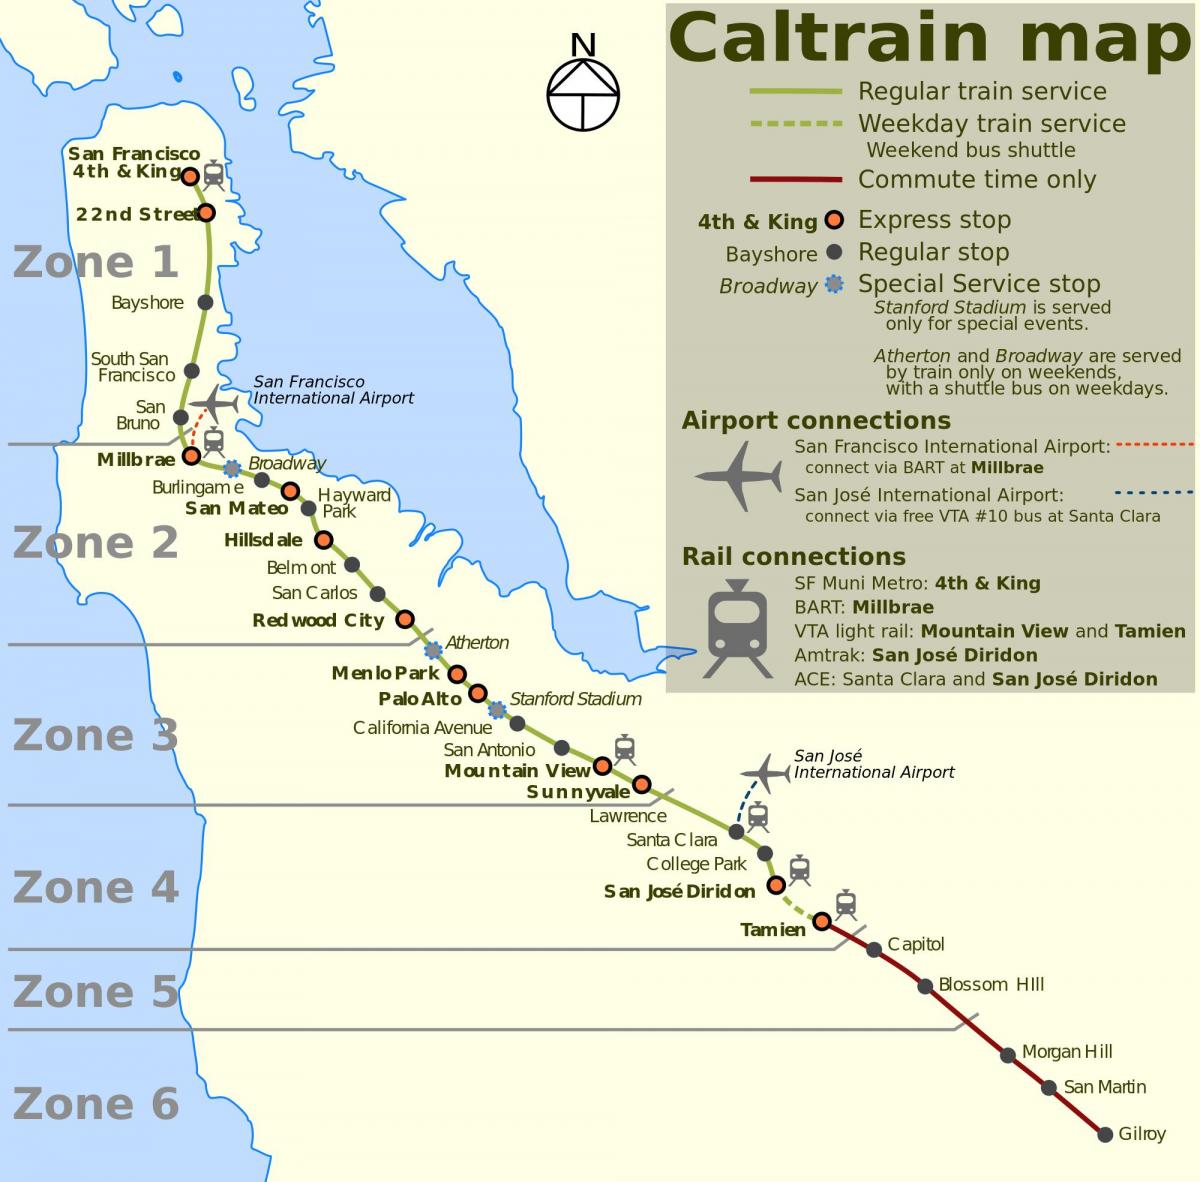 San Francisco caltrain anzeigen